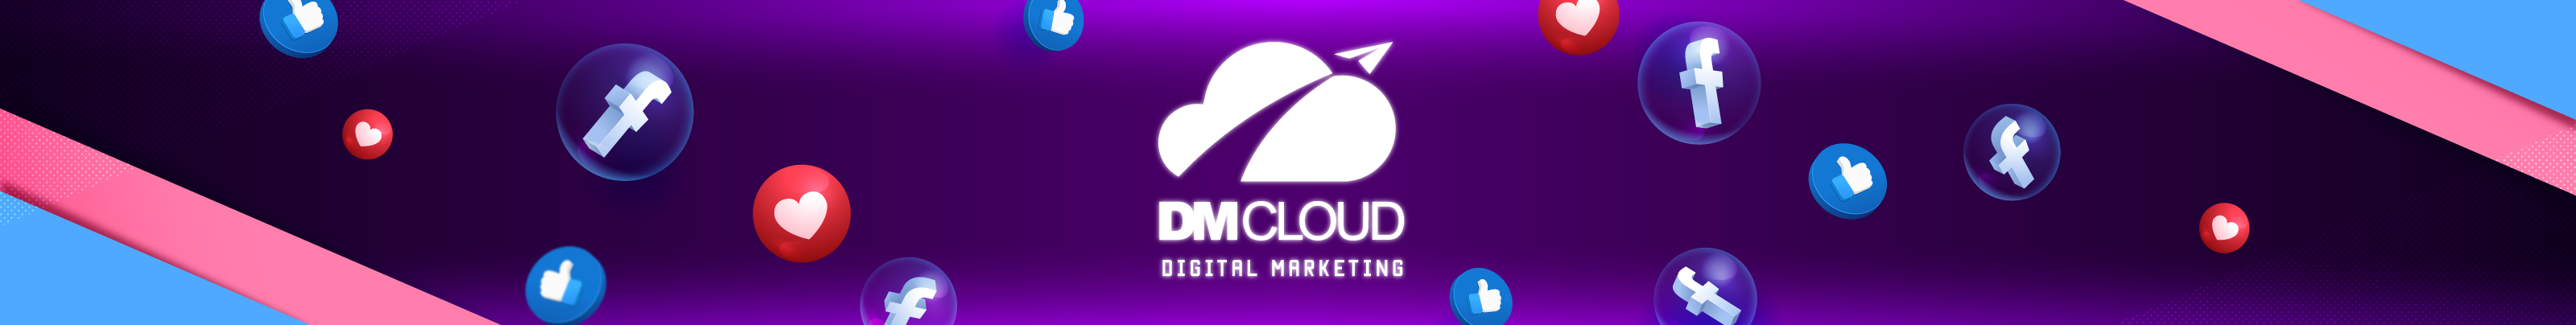 Baner profilu użytkownika DM cloud